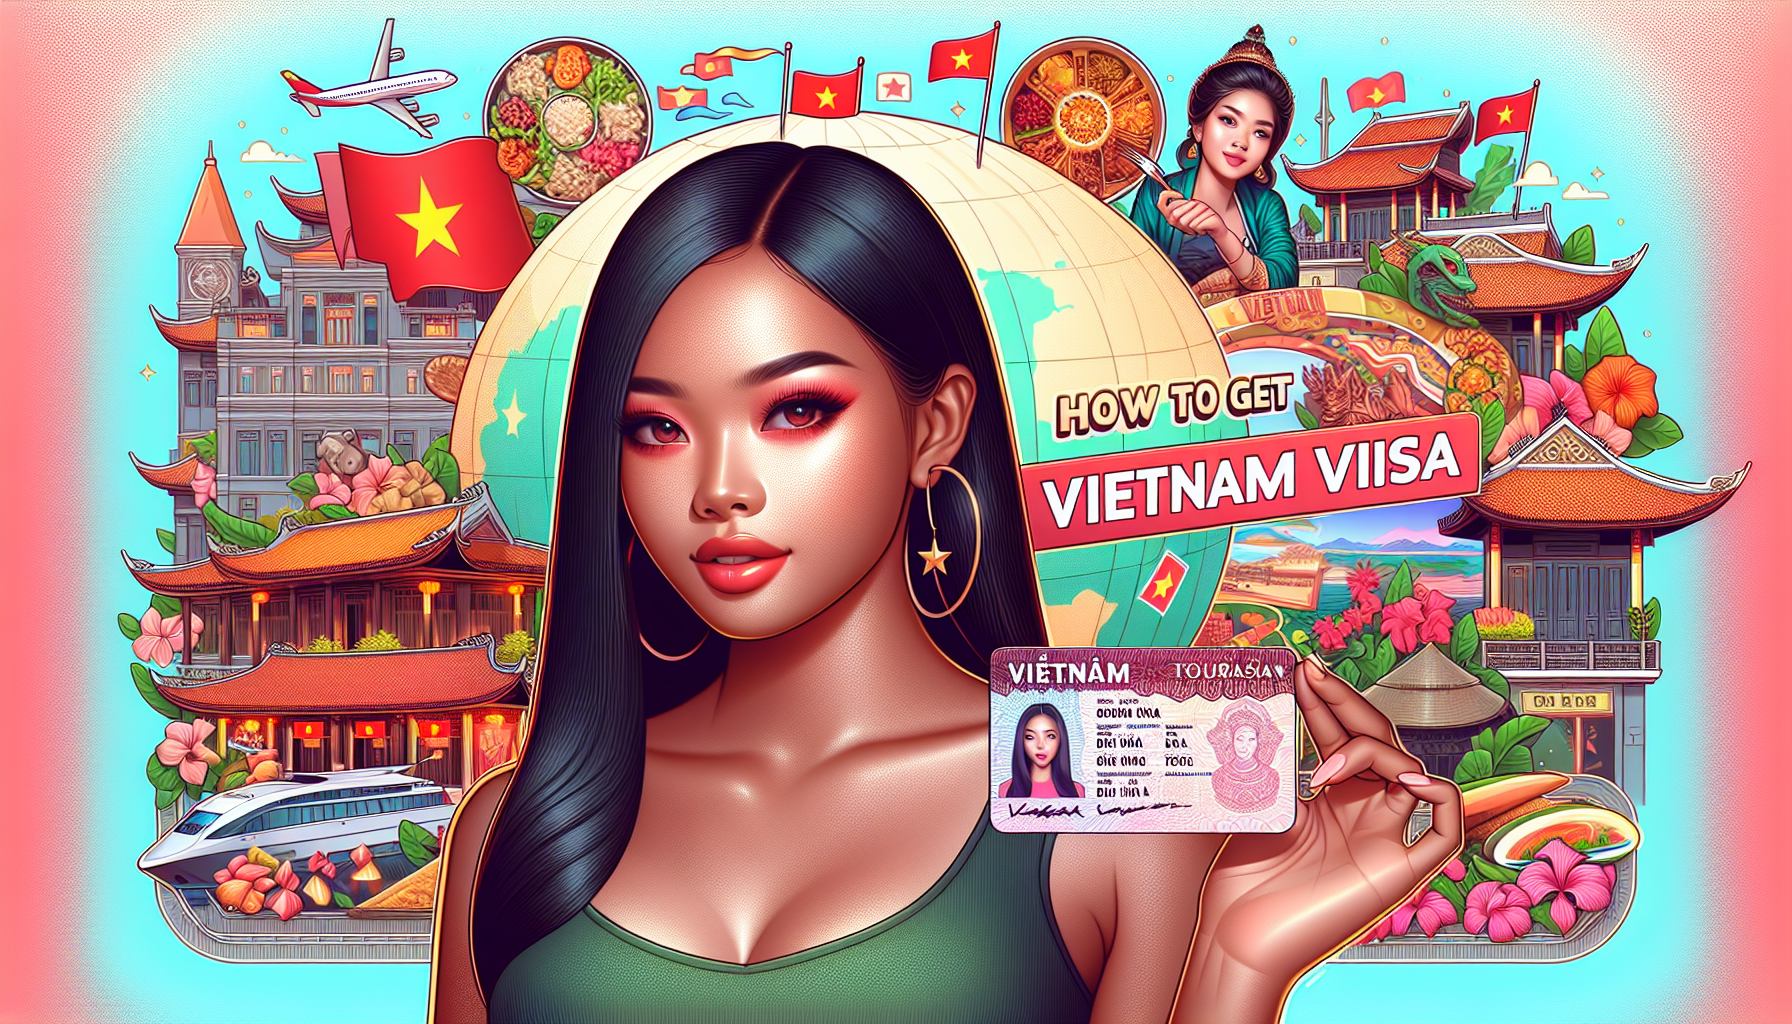 Vietnam Evisa for Citizens from Georgetown